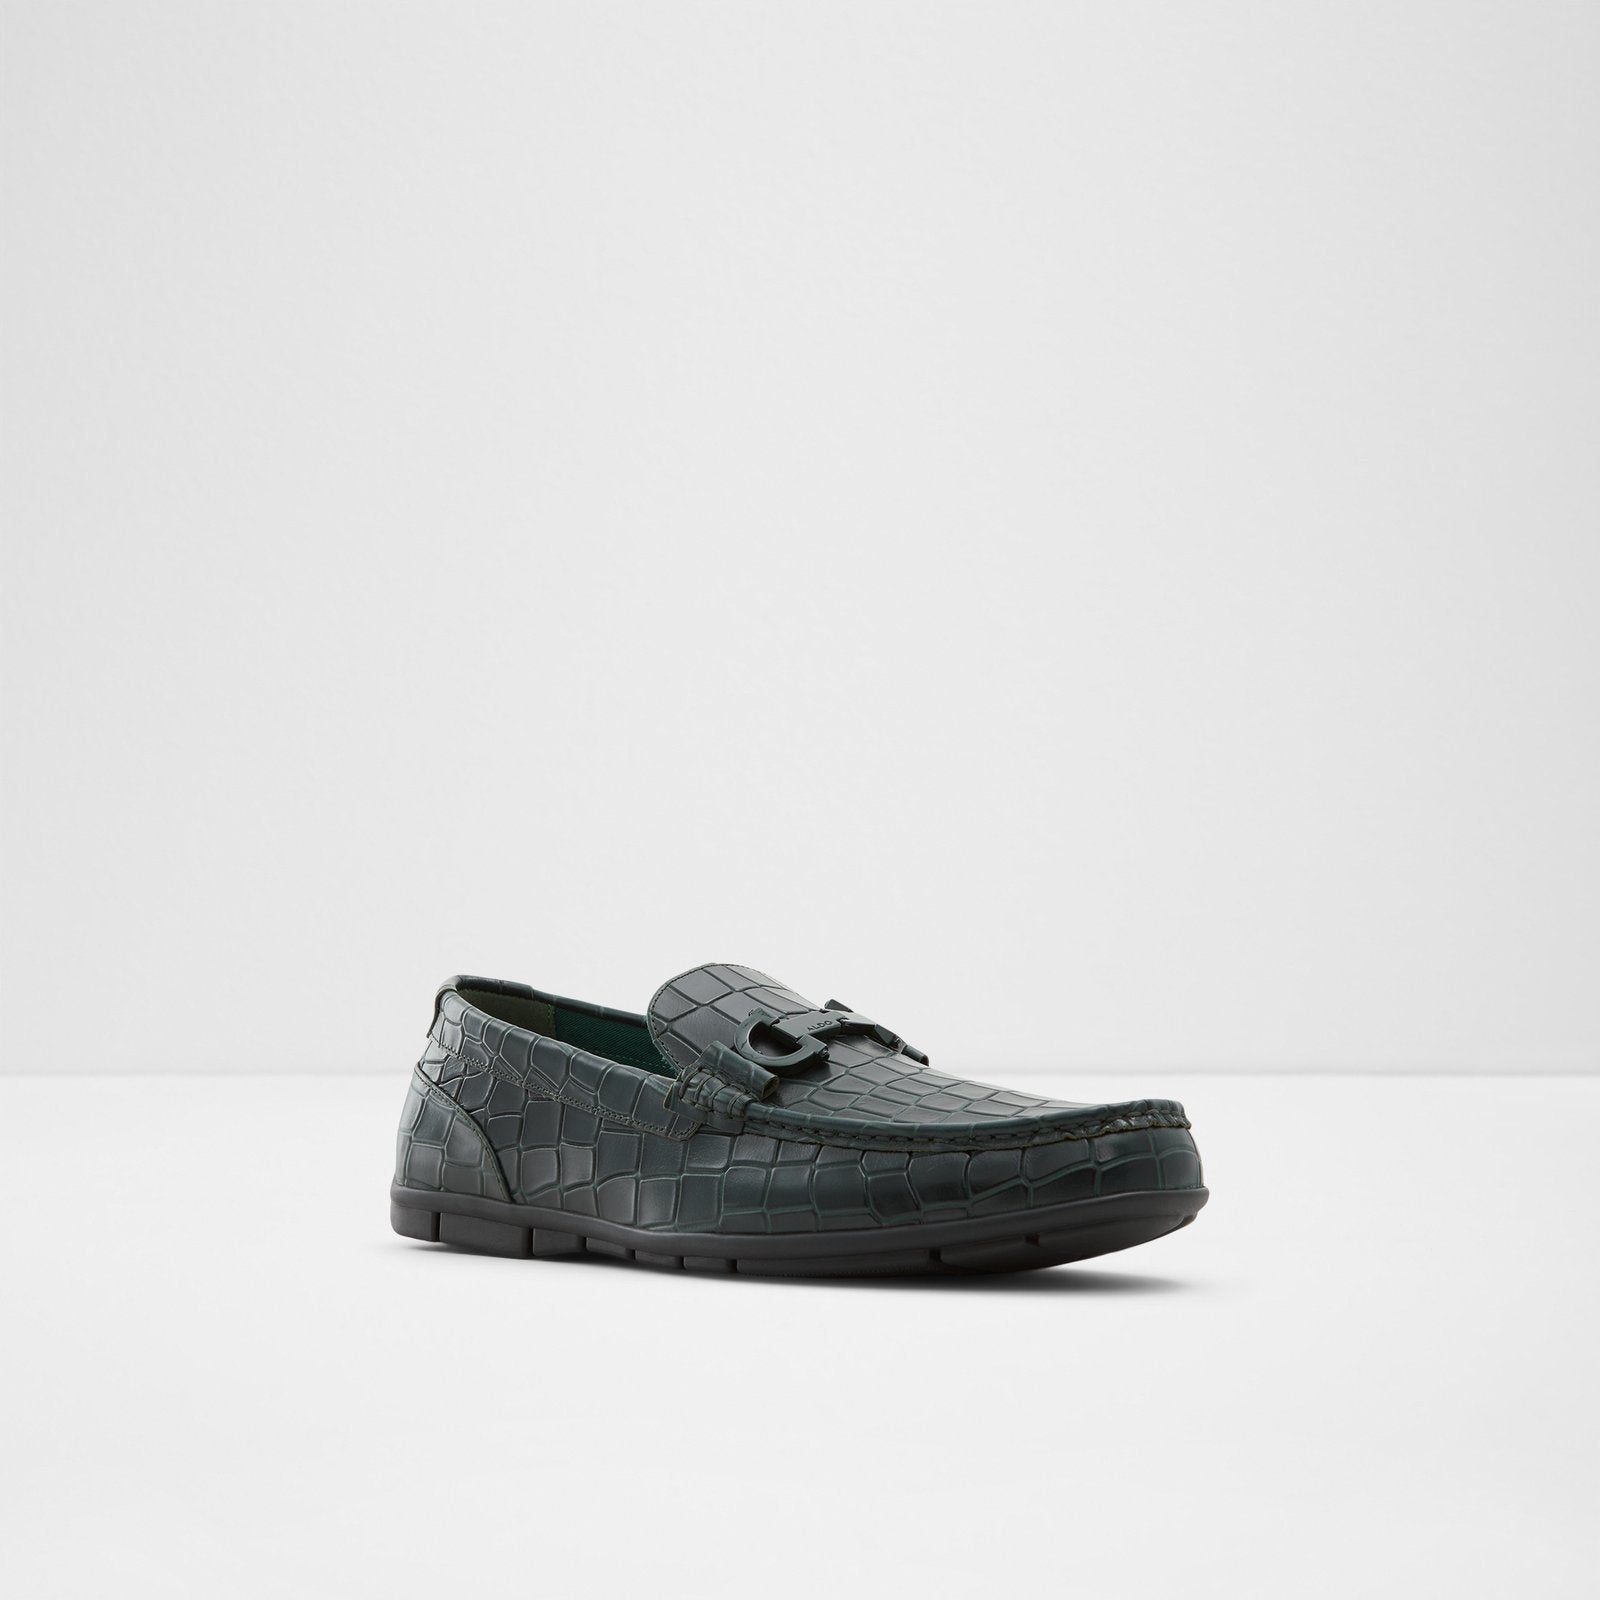 Orlovoflex Men Shoes - Light Green - ALDO KSA